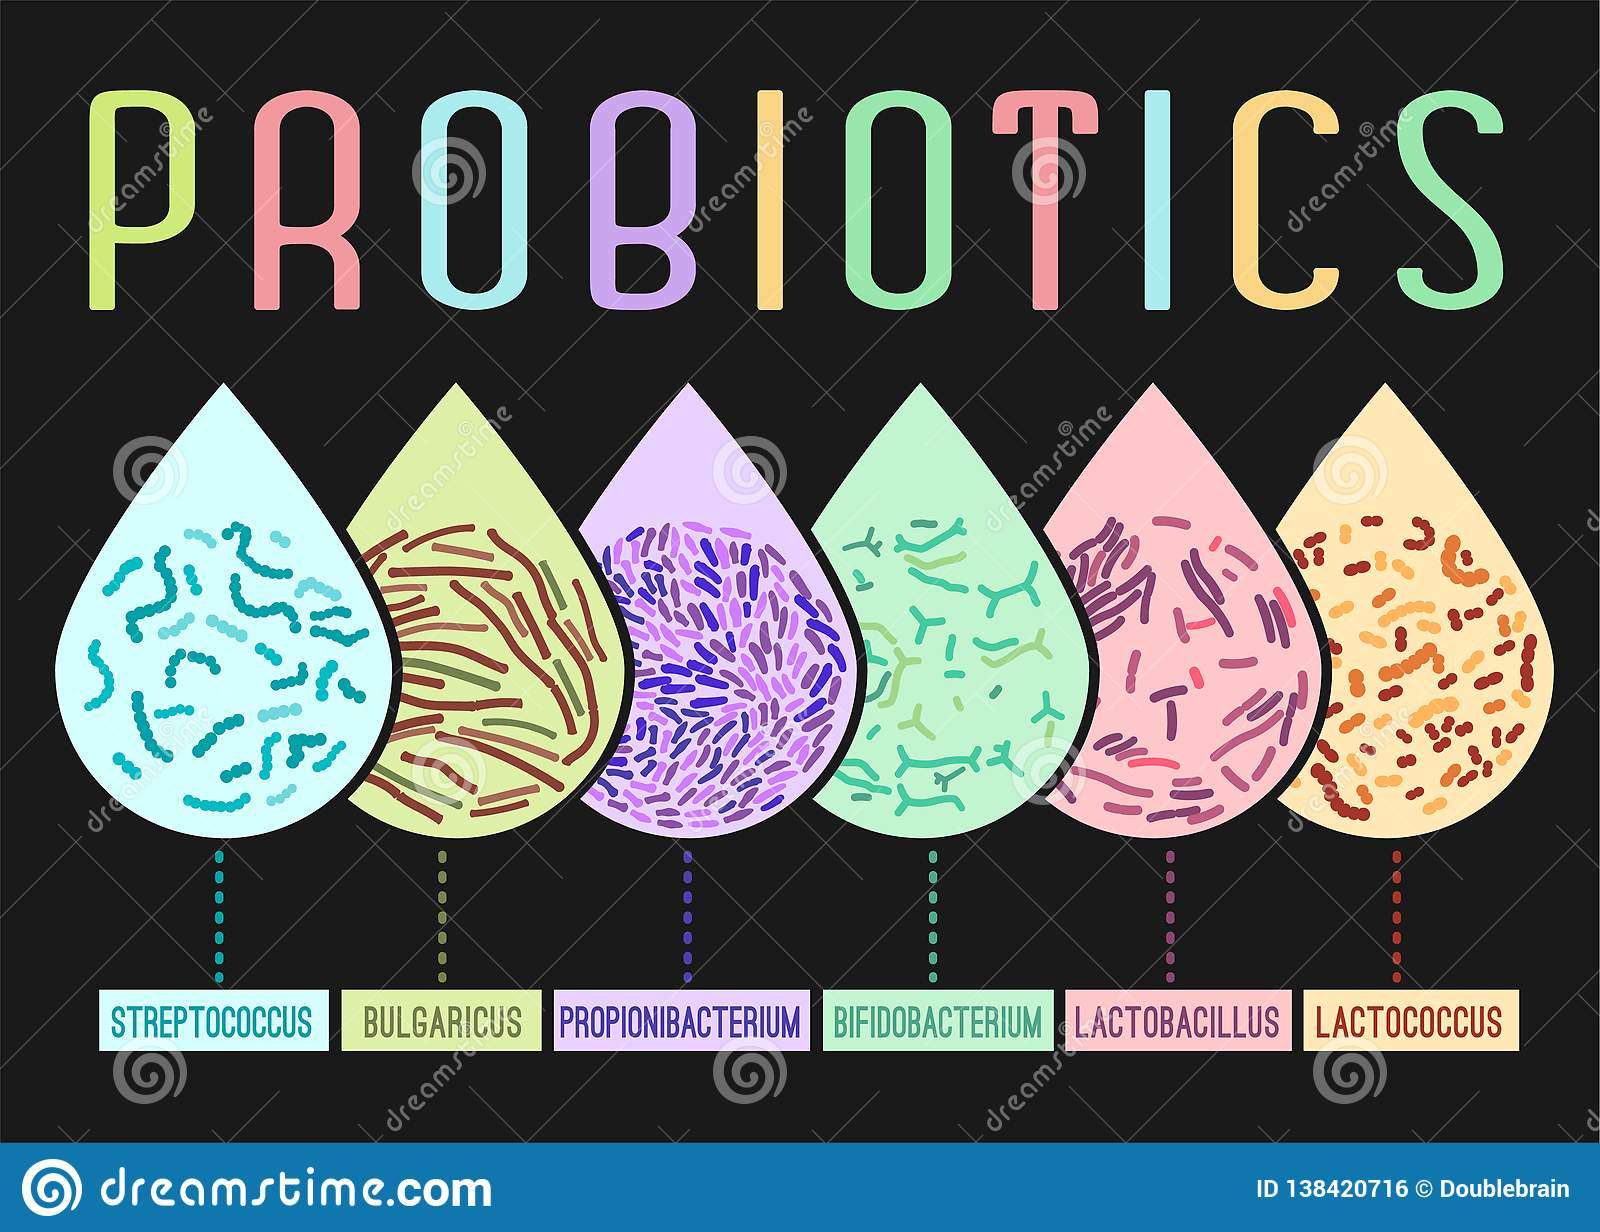 Probiotics Types Poster stock vector. Illustration of germ